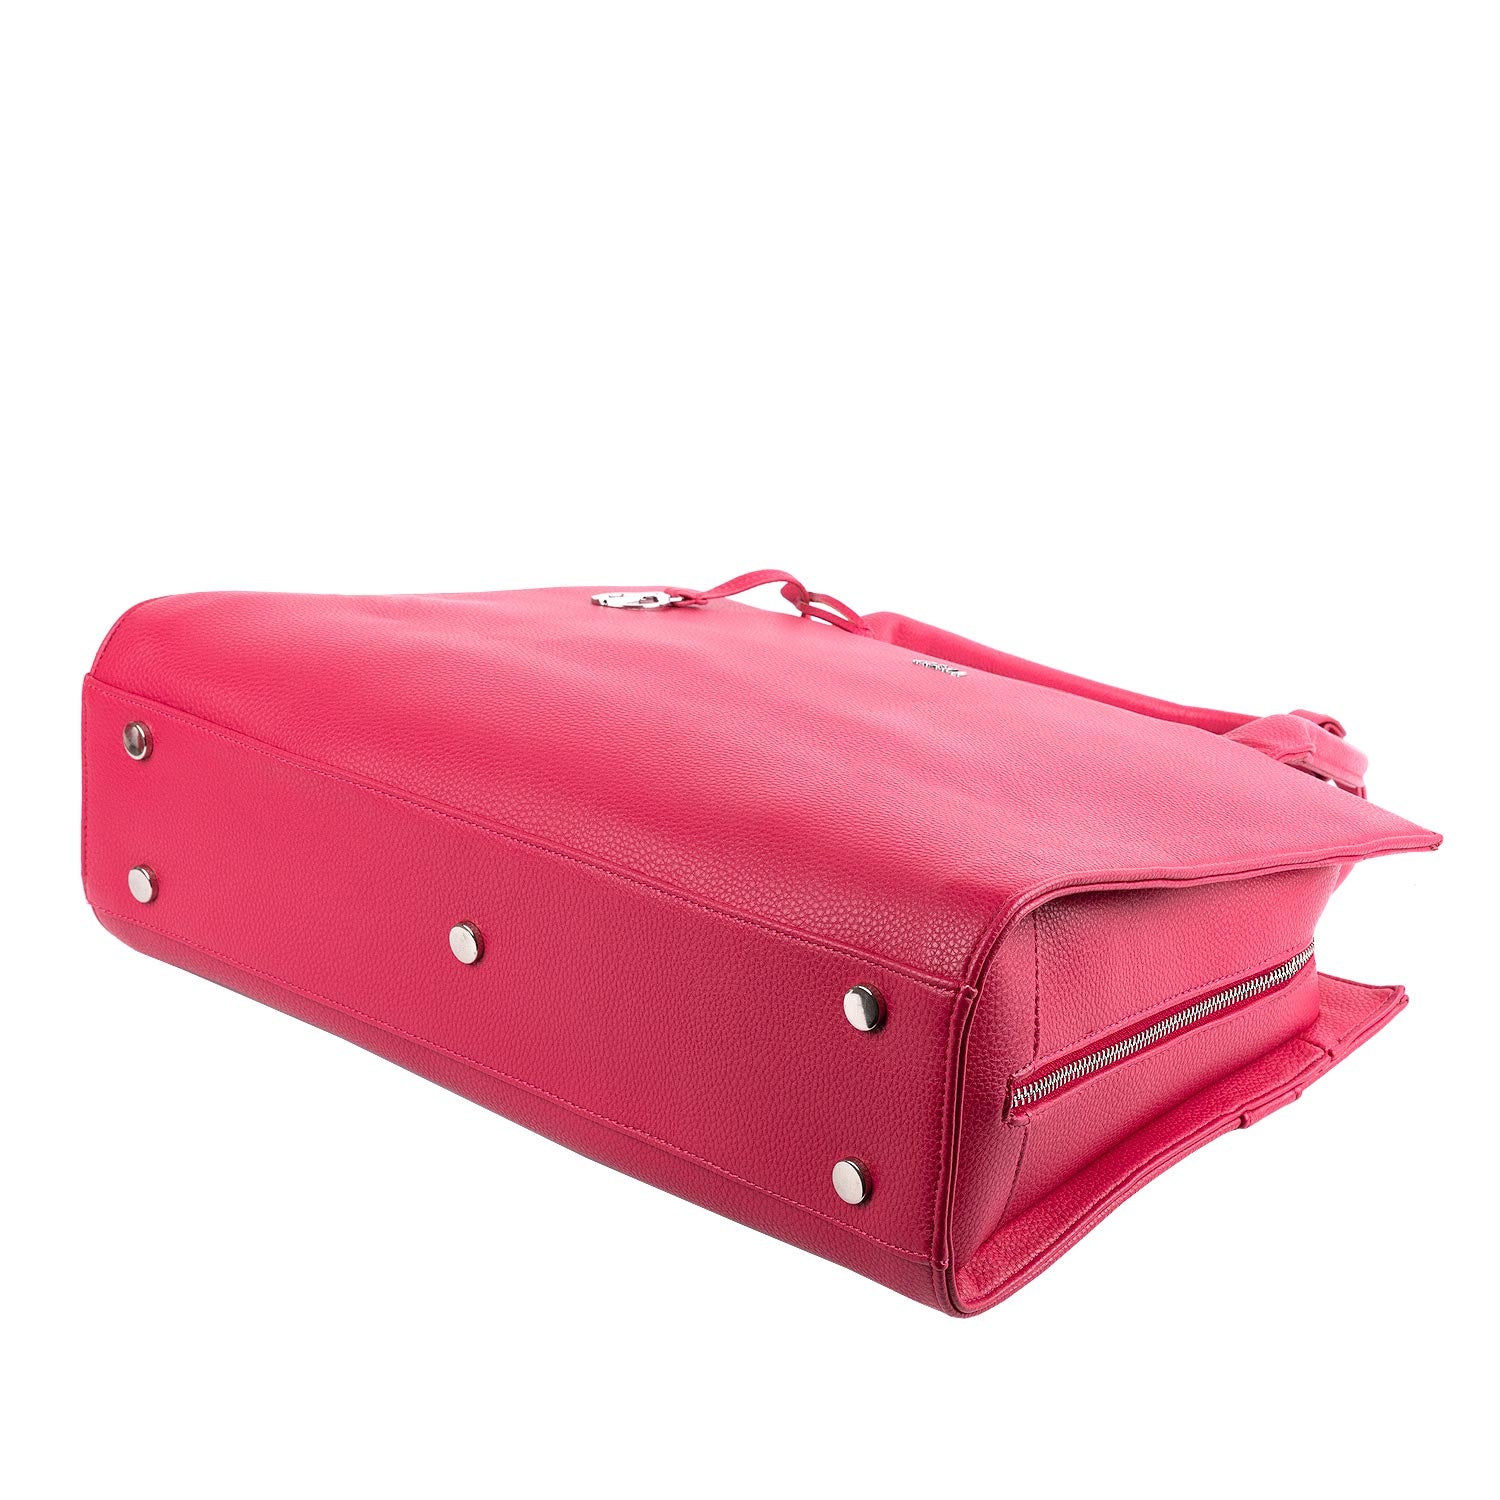 Socha laptoptas nivodur Pink Lady 15.6 roze onderkant